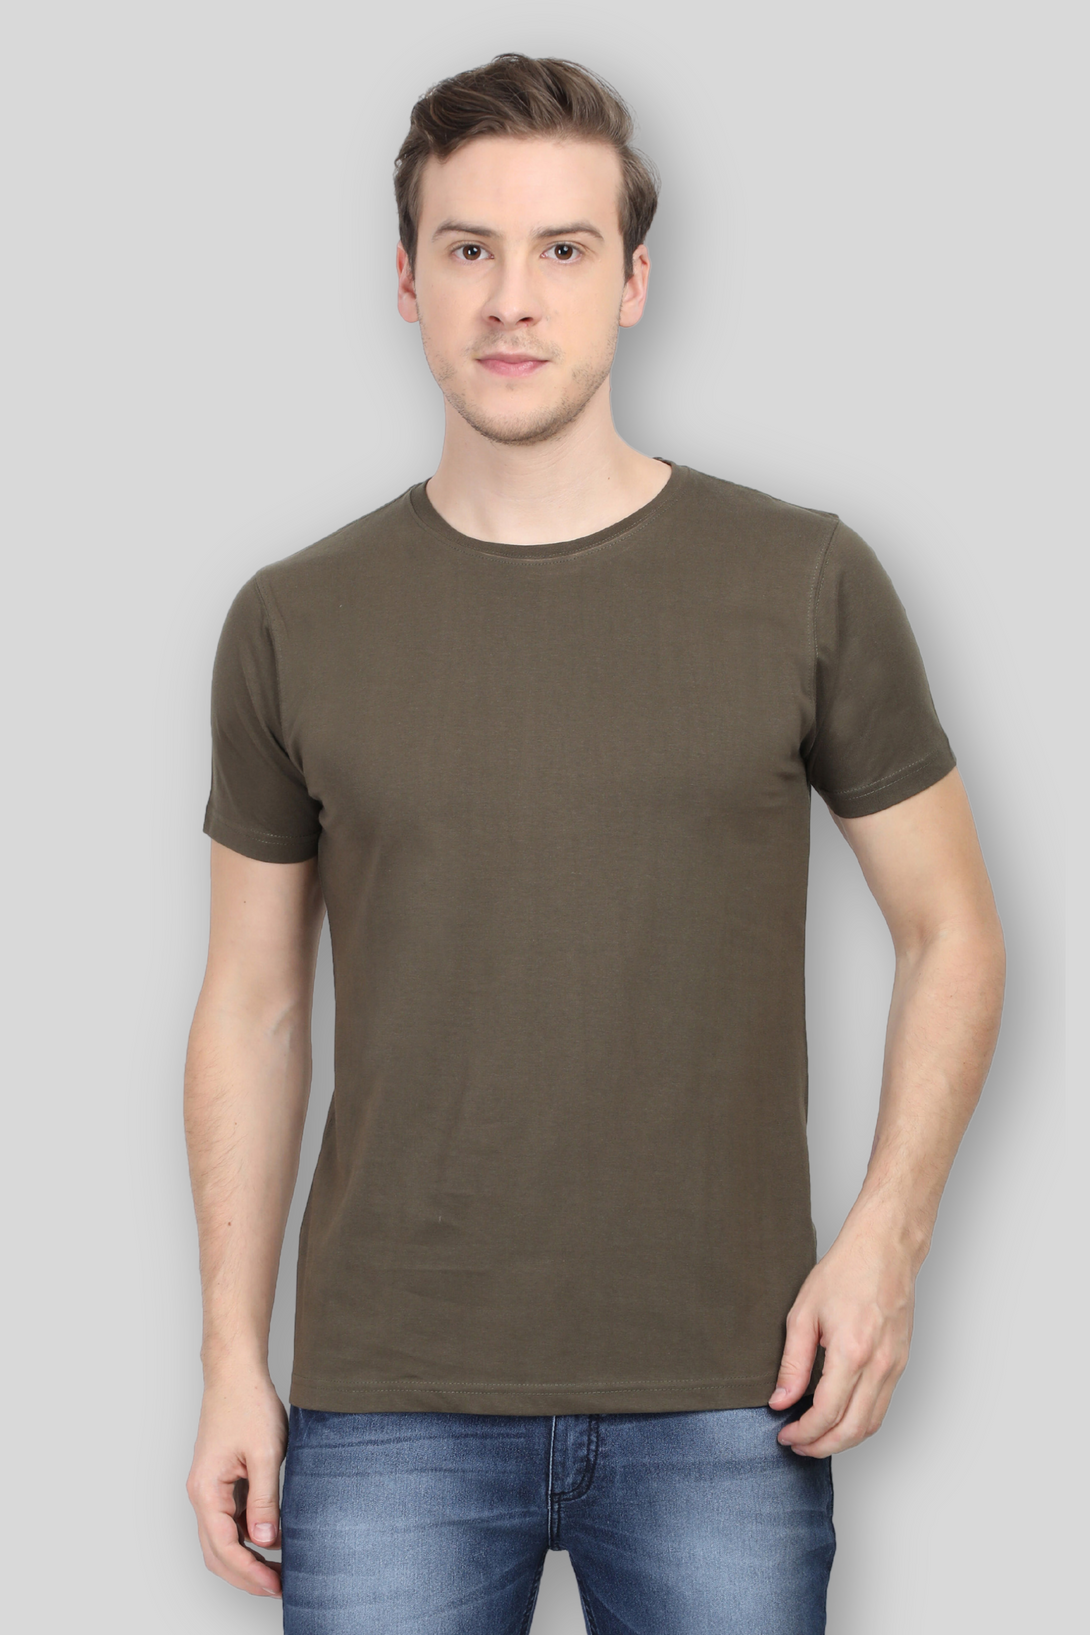 Olive Green T-Shirt For Men - WowWaves - 6